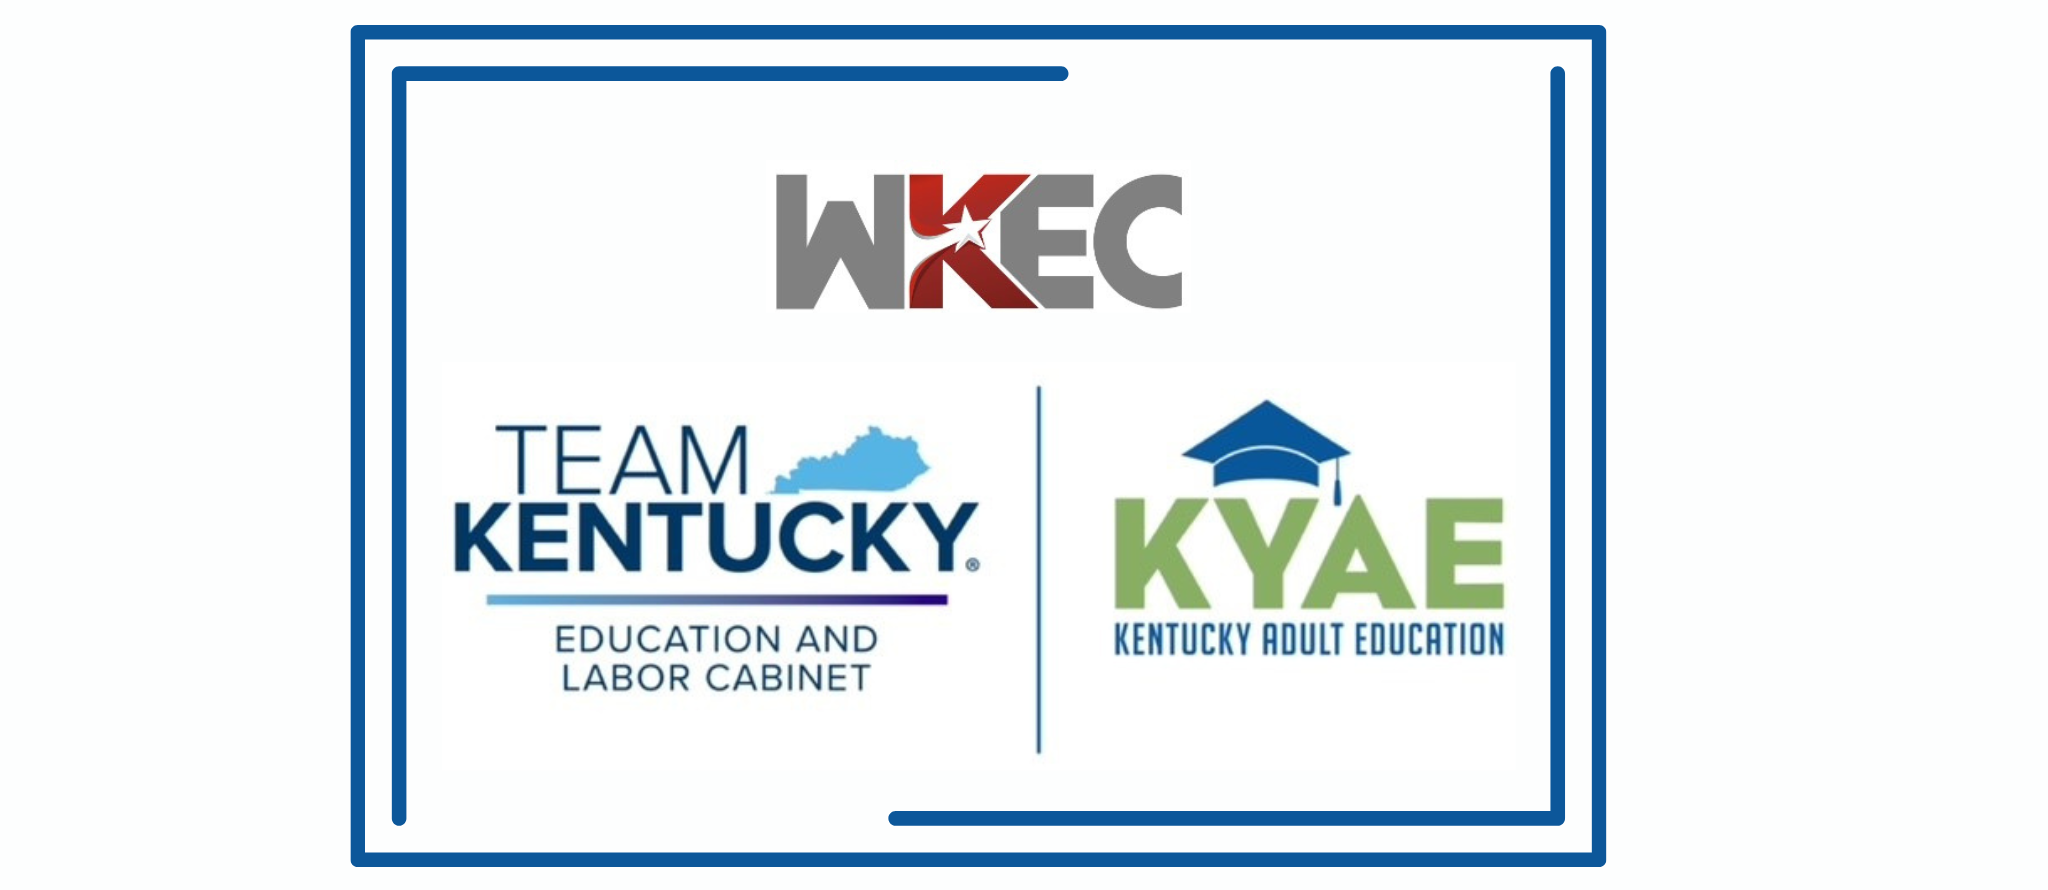 Kentucky Adult Education logo